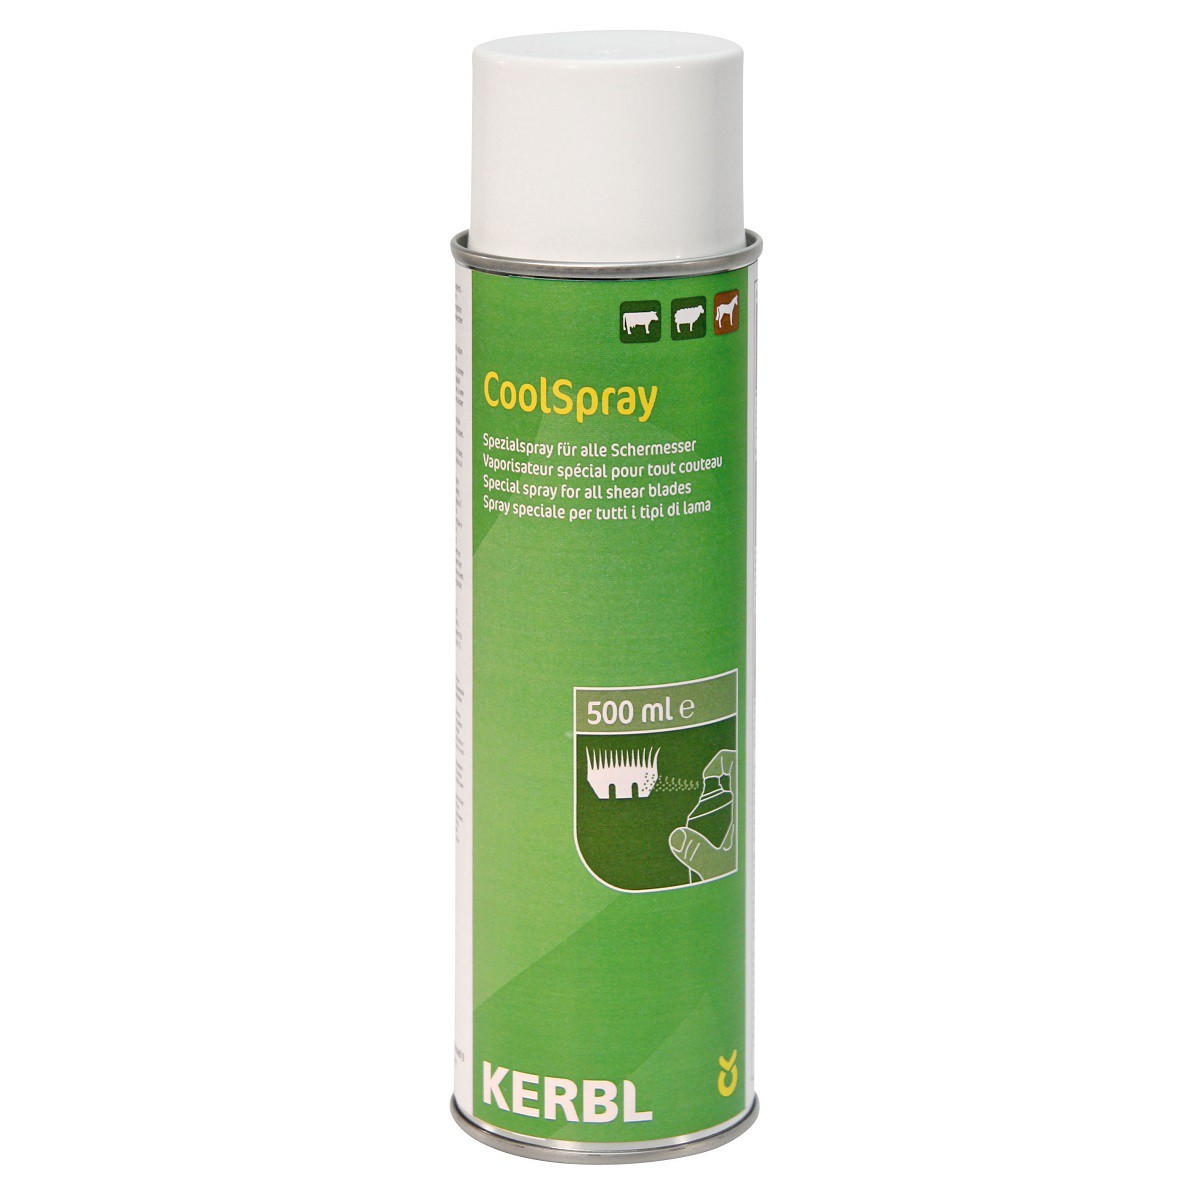 Kerbl Coolspray detergente e refrigerante per tosatrici 500 ml